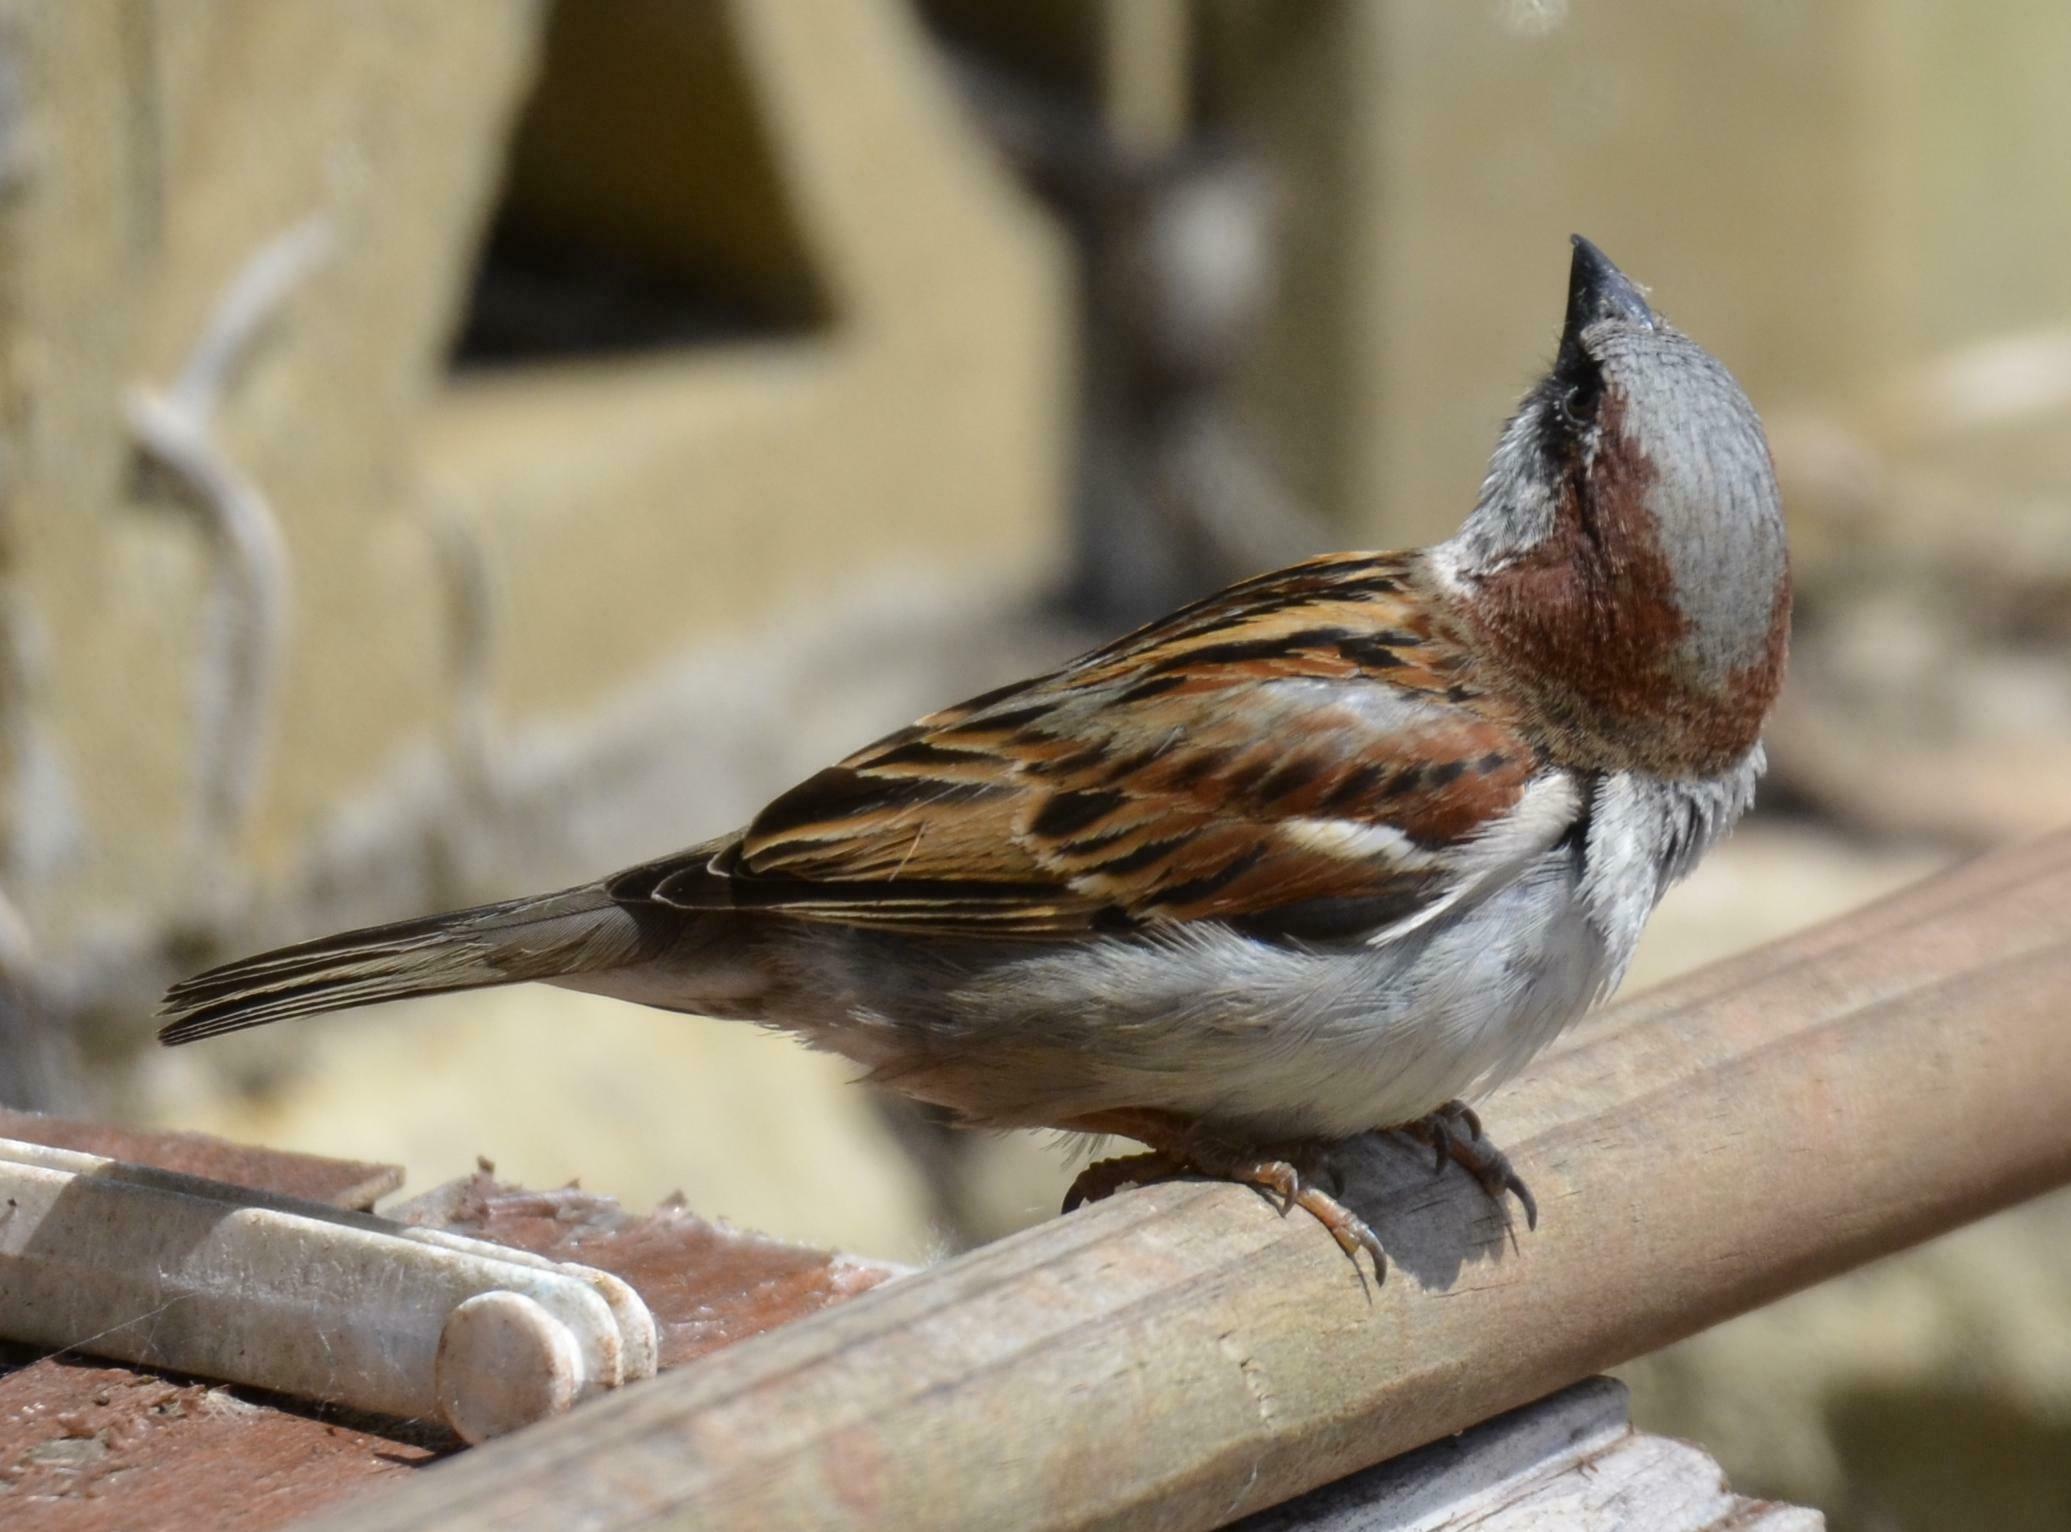 Portrait of a house sparrow